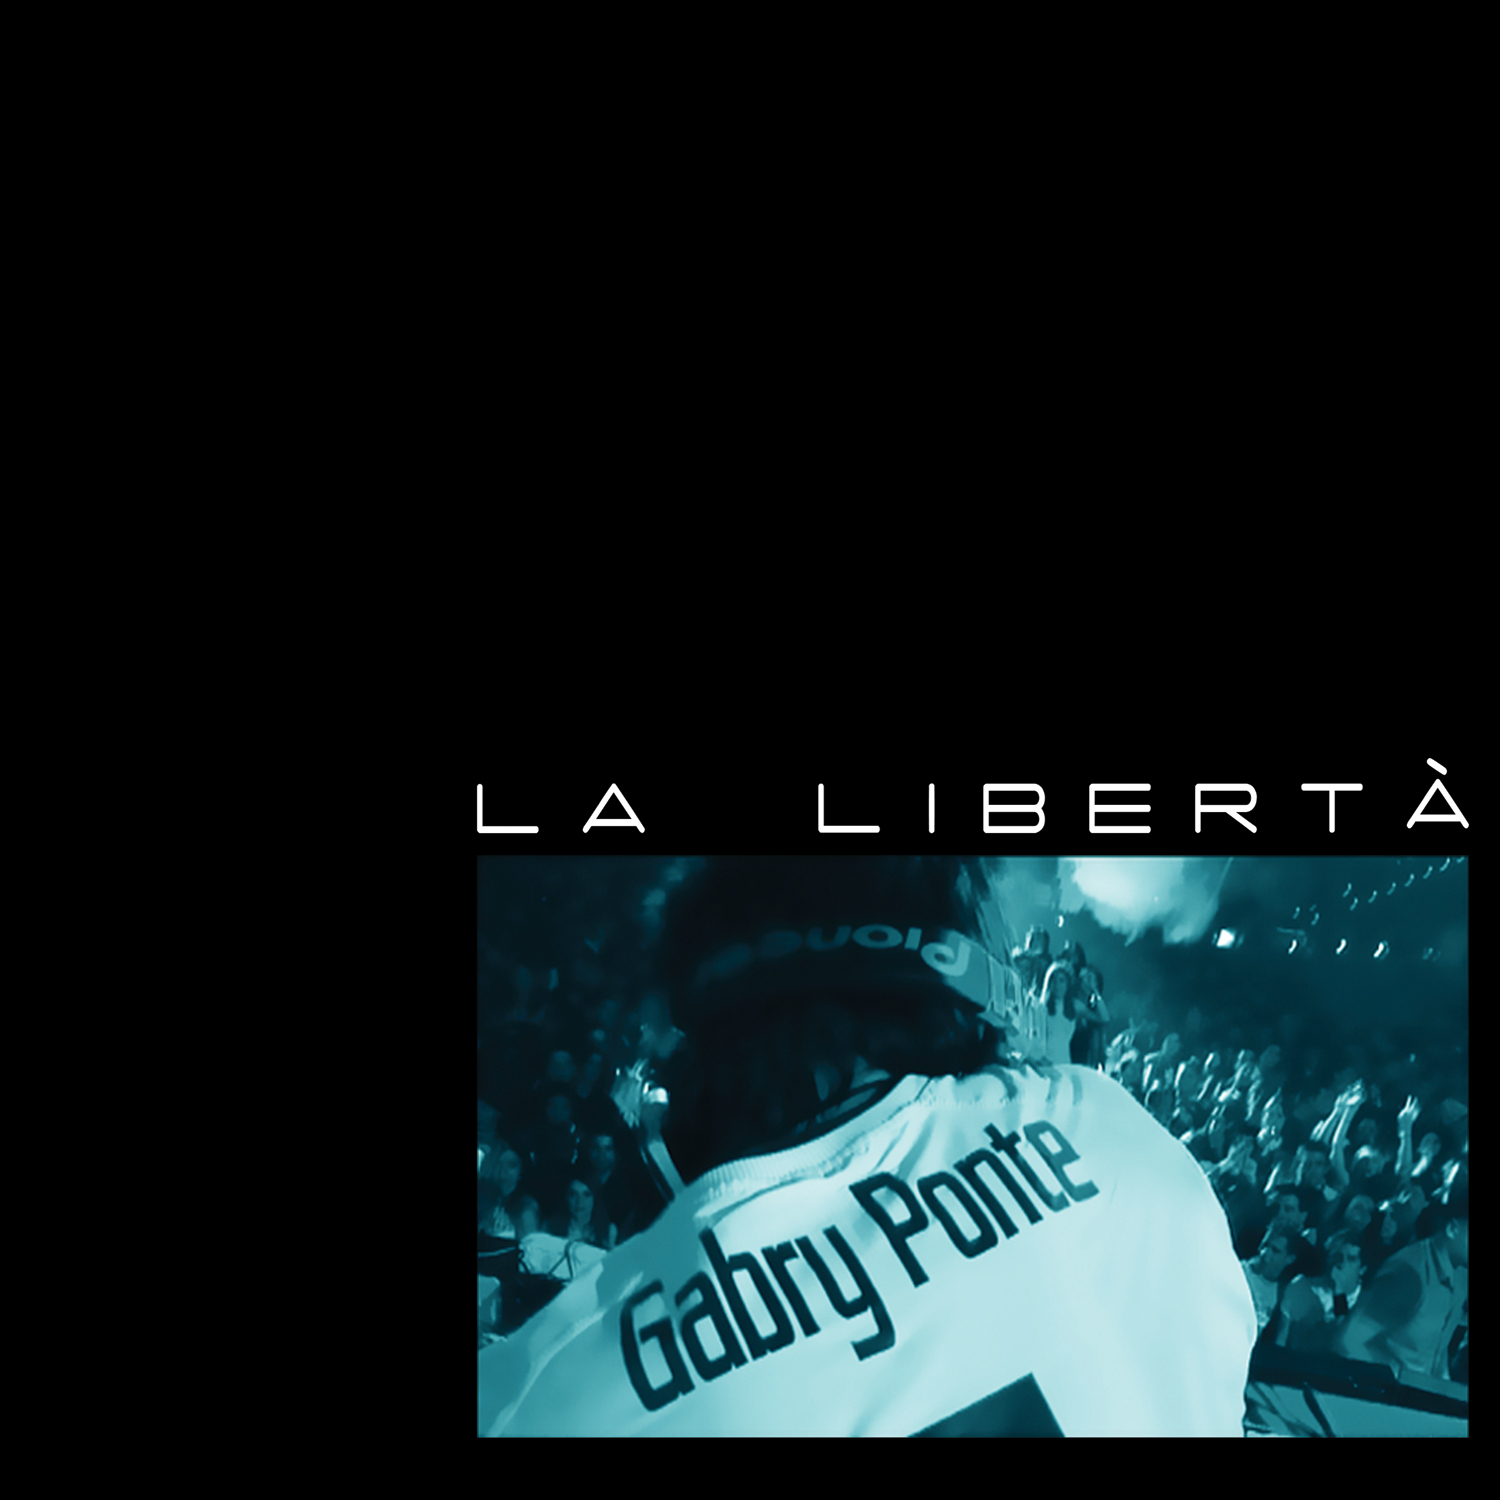 La Liberta Opera mix